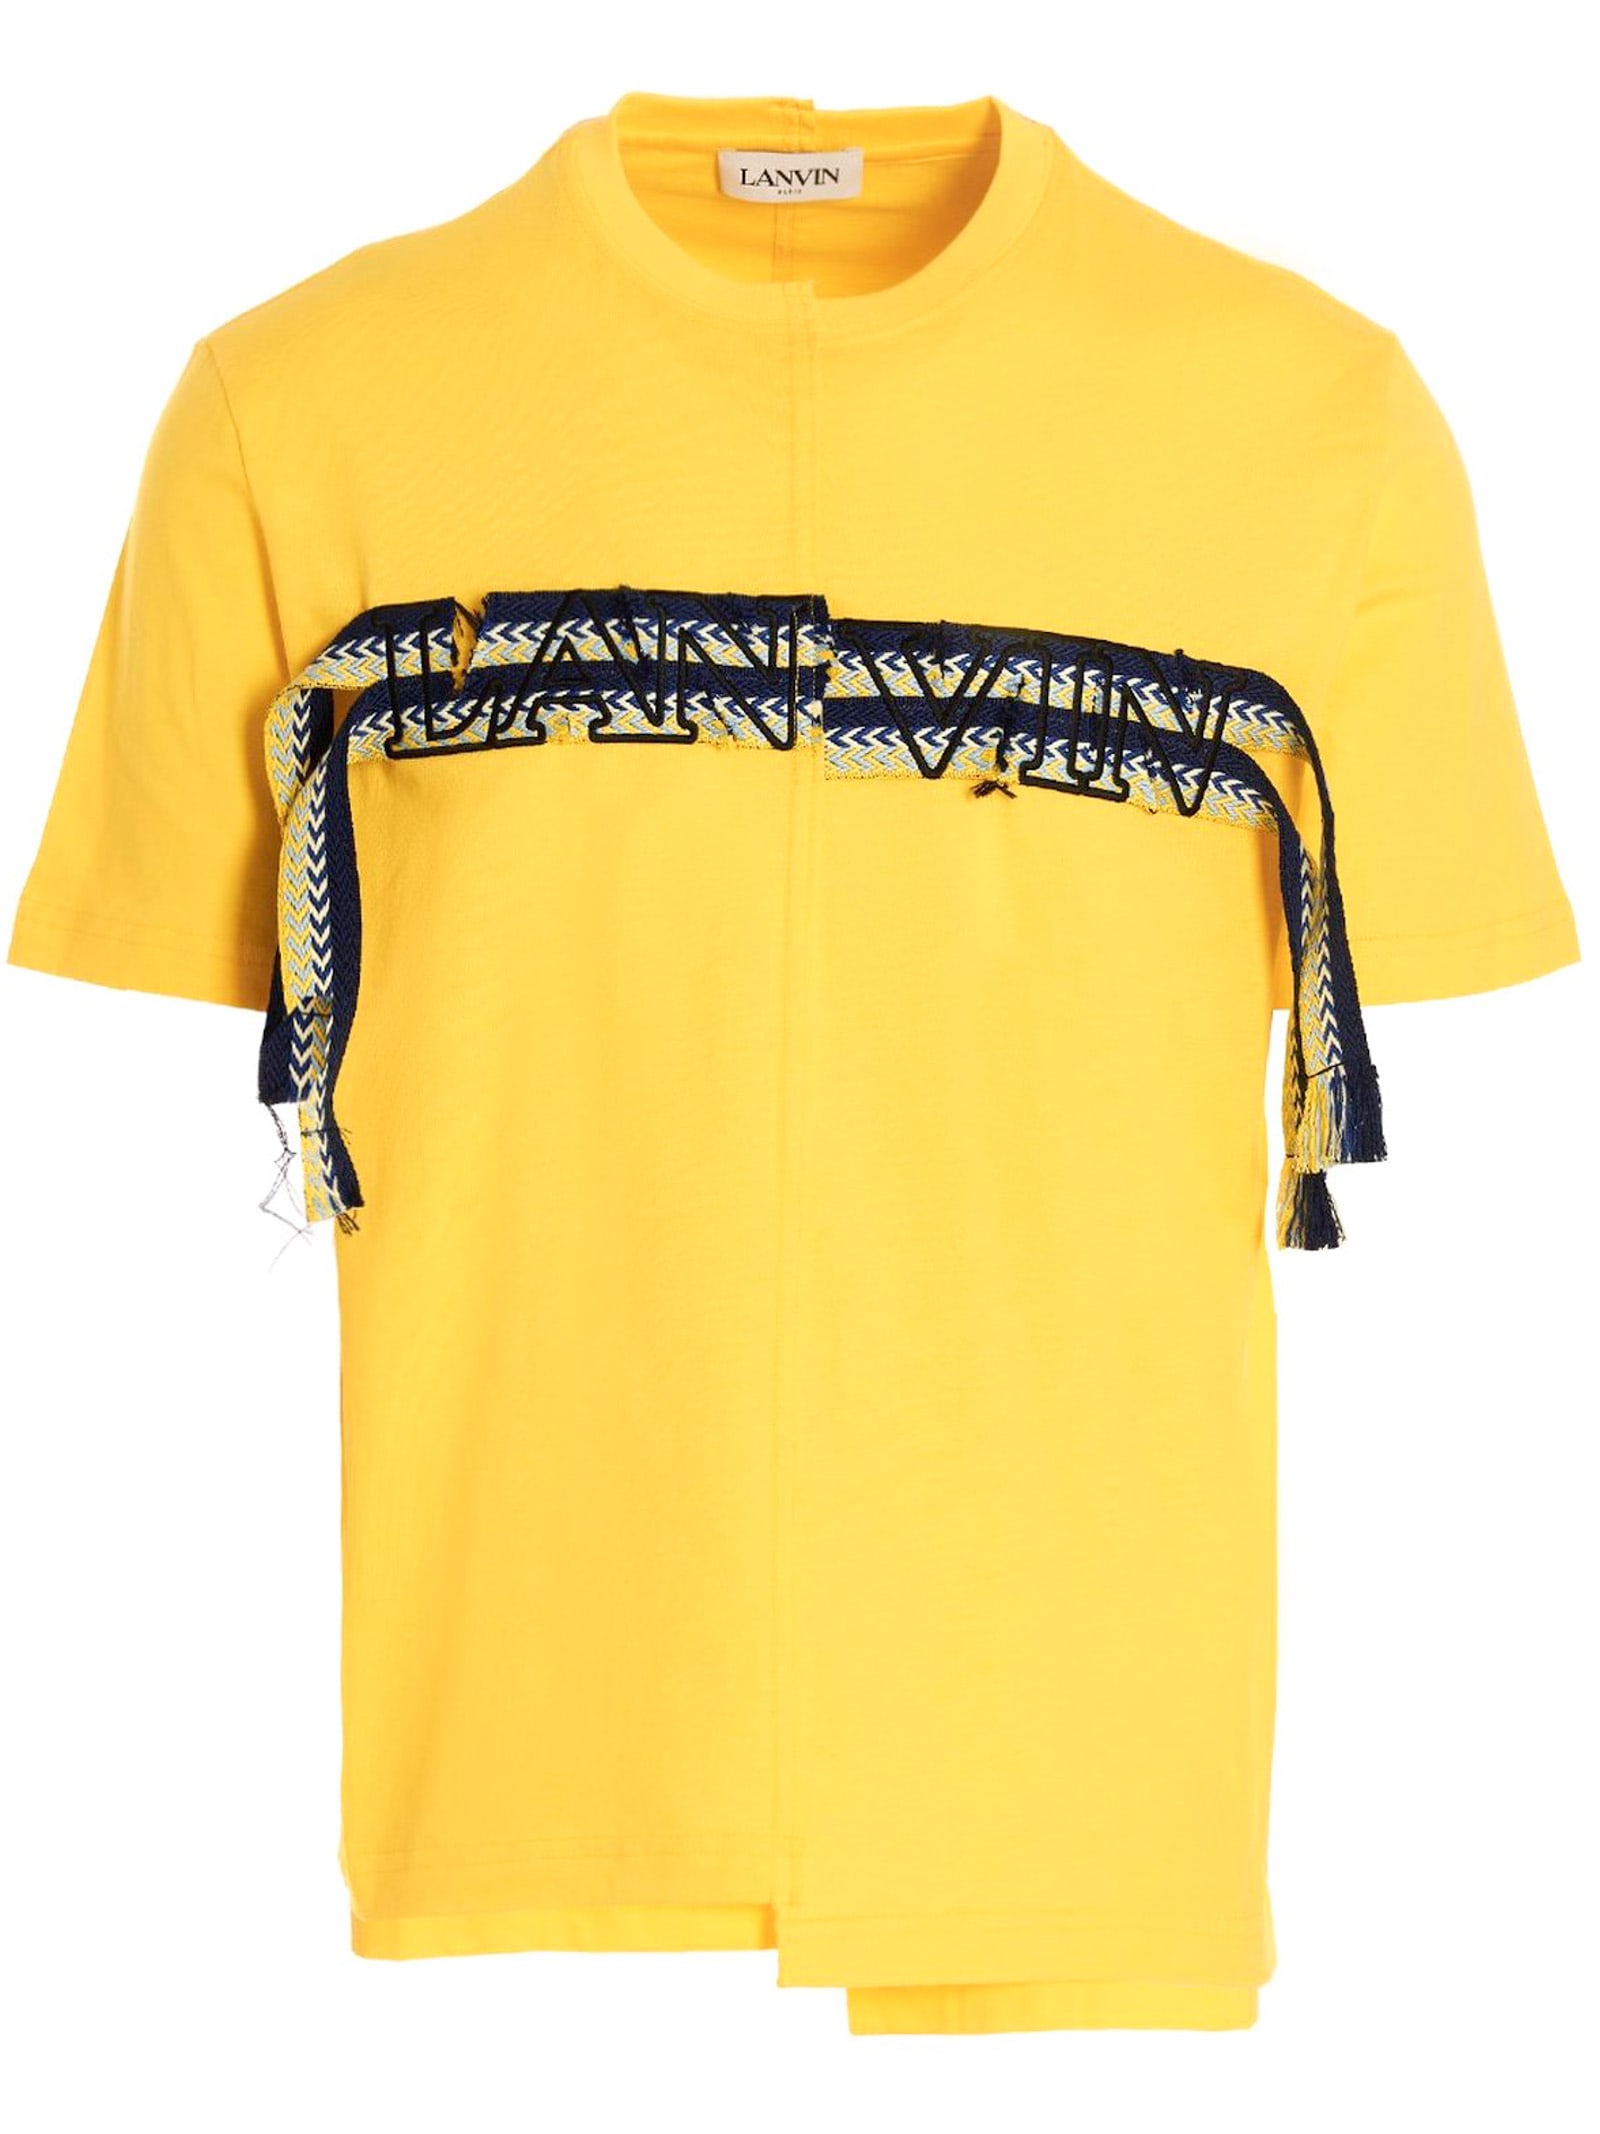 Lanvin Yellow Cotton T-shirt